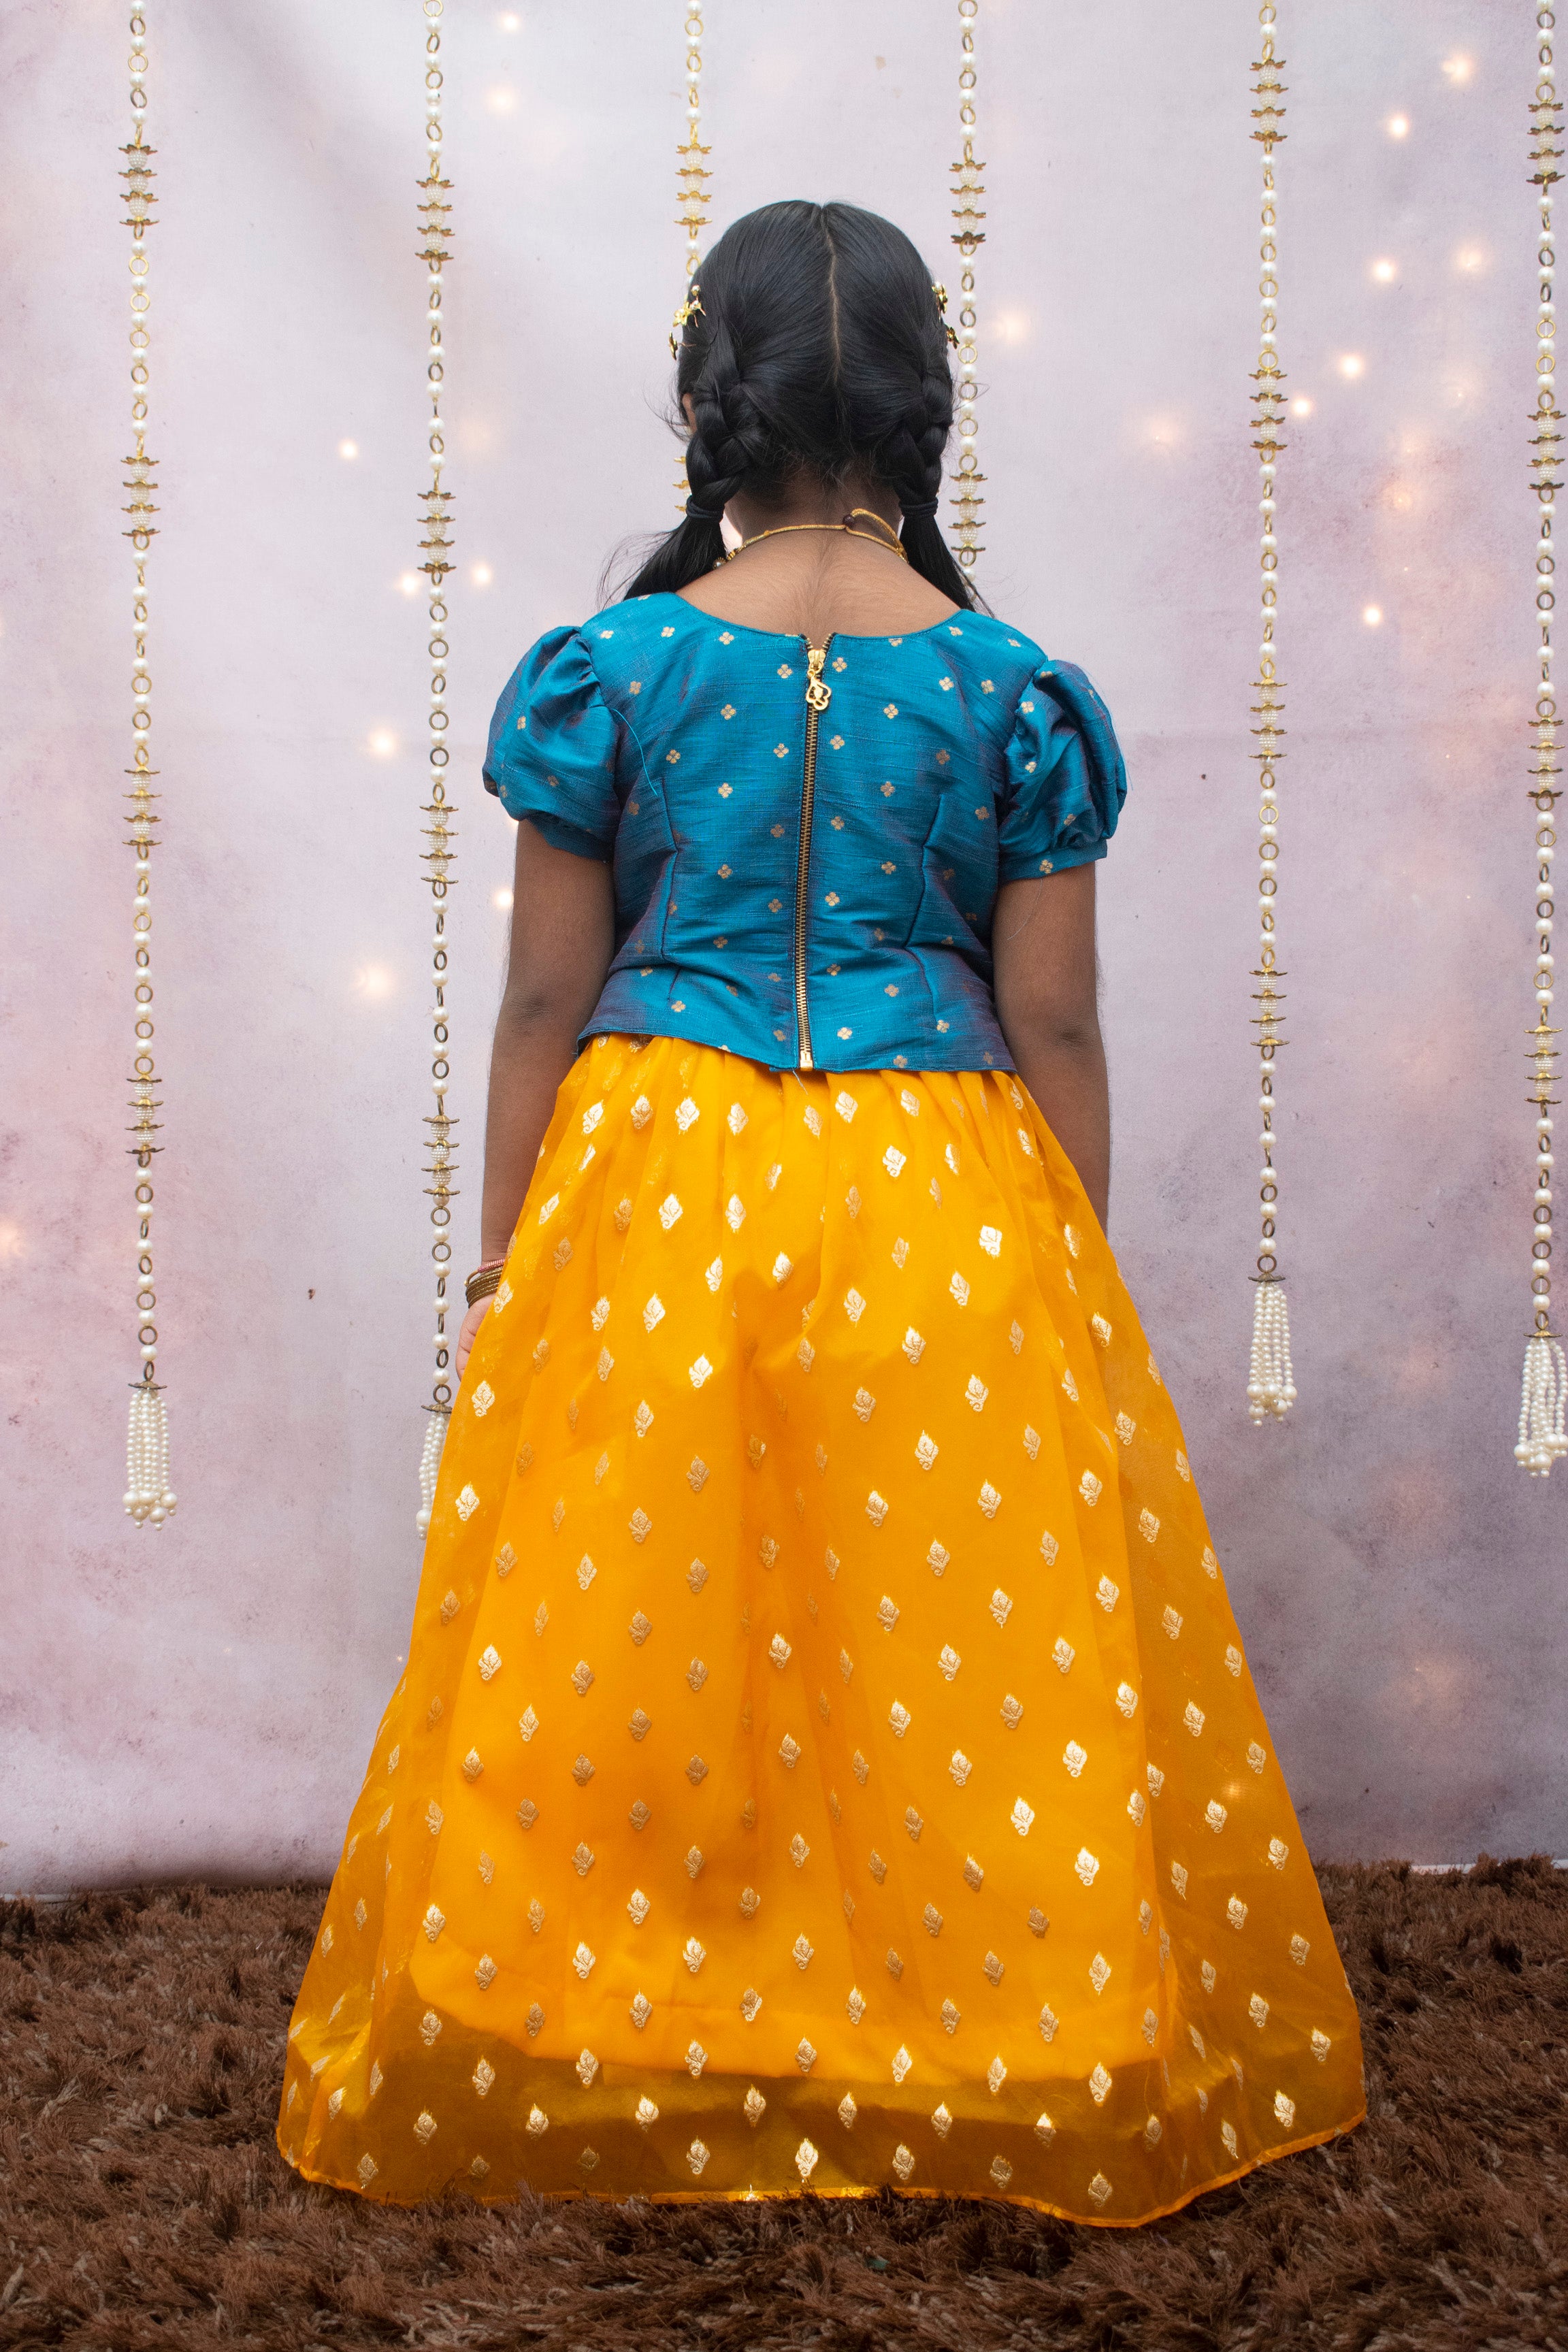 Naiyanika blue top and yellow skirt mini